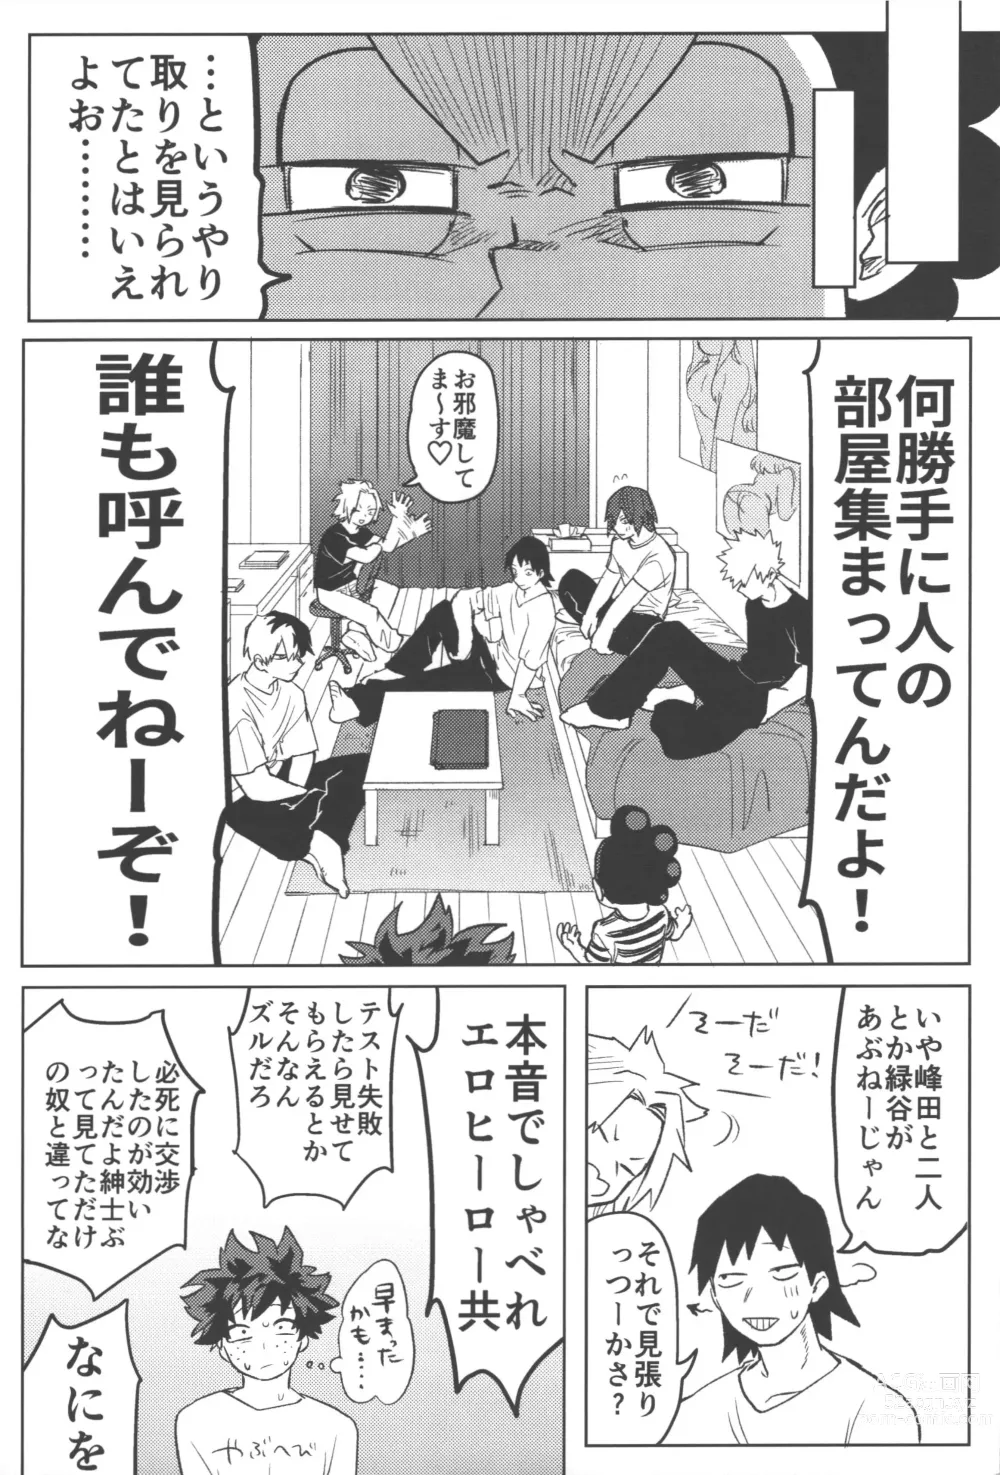 Page 15 of doujinshi R18